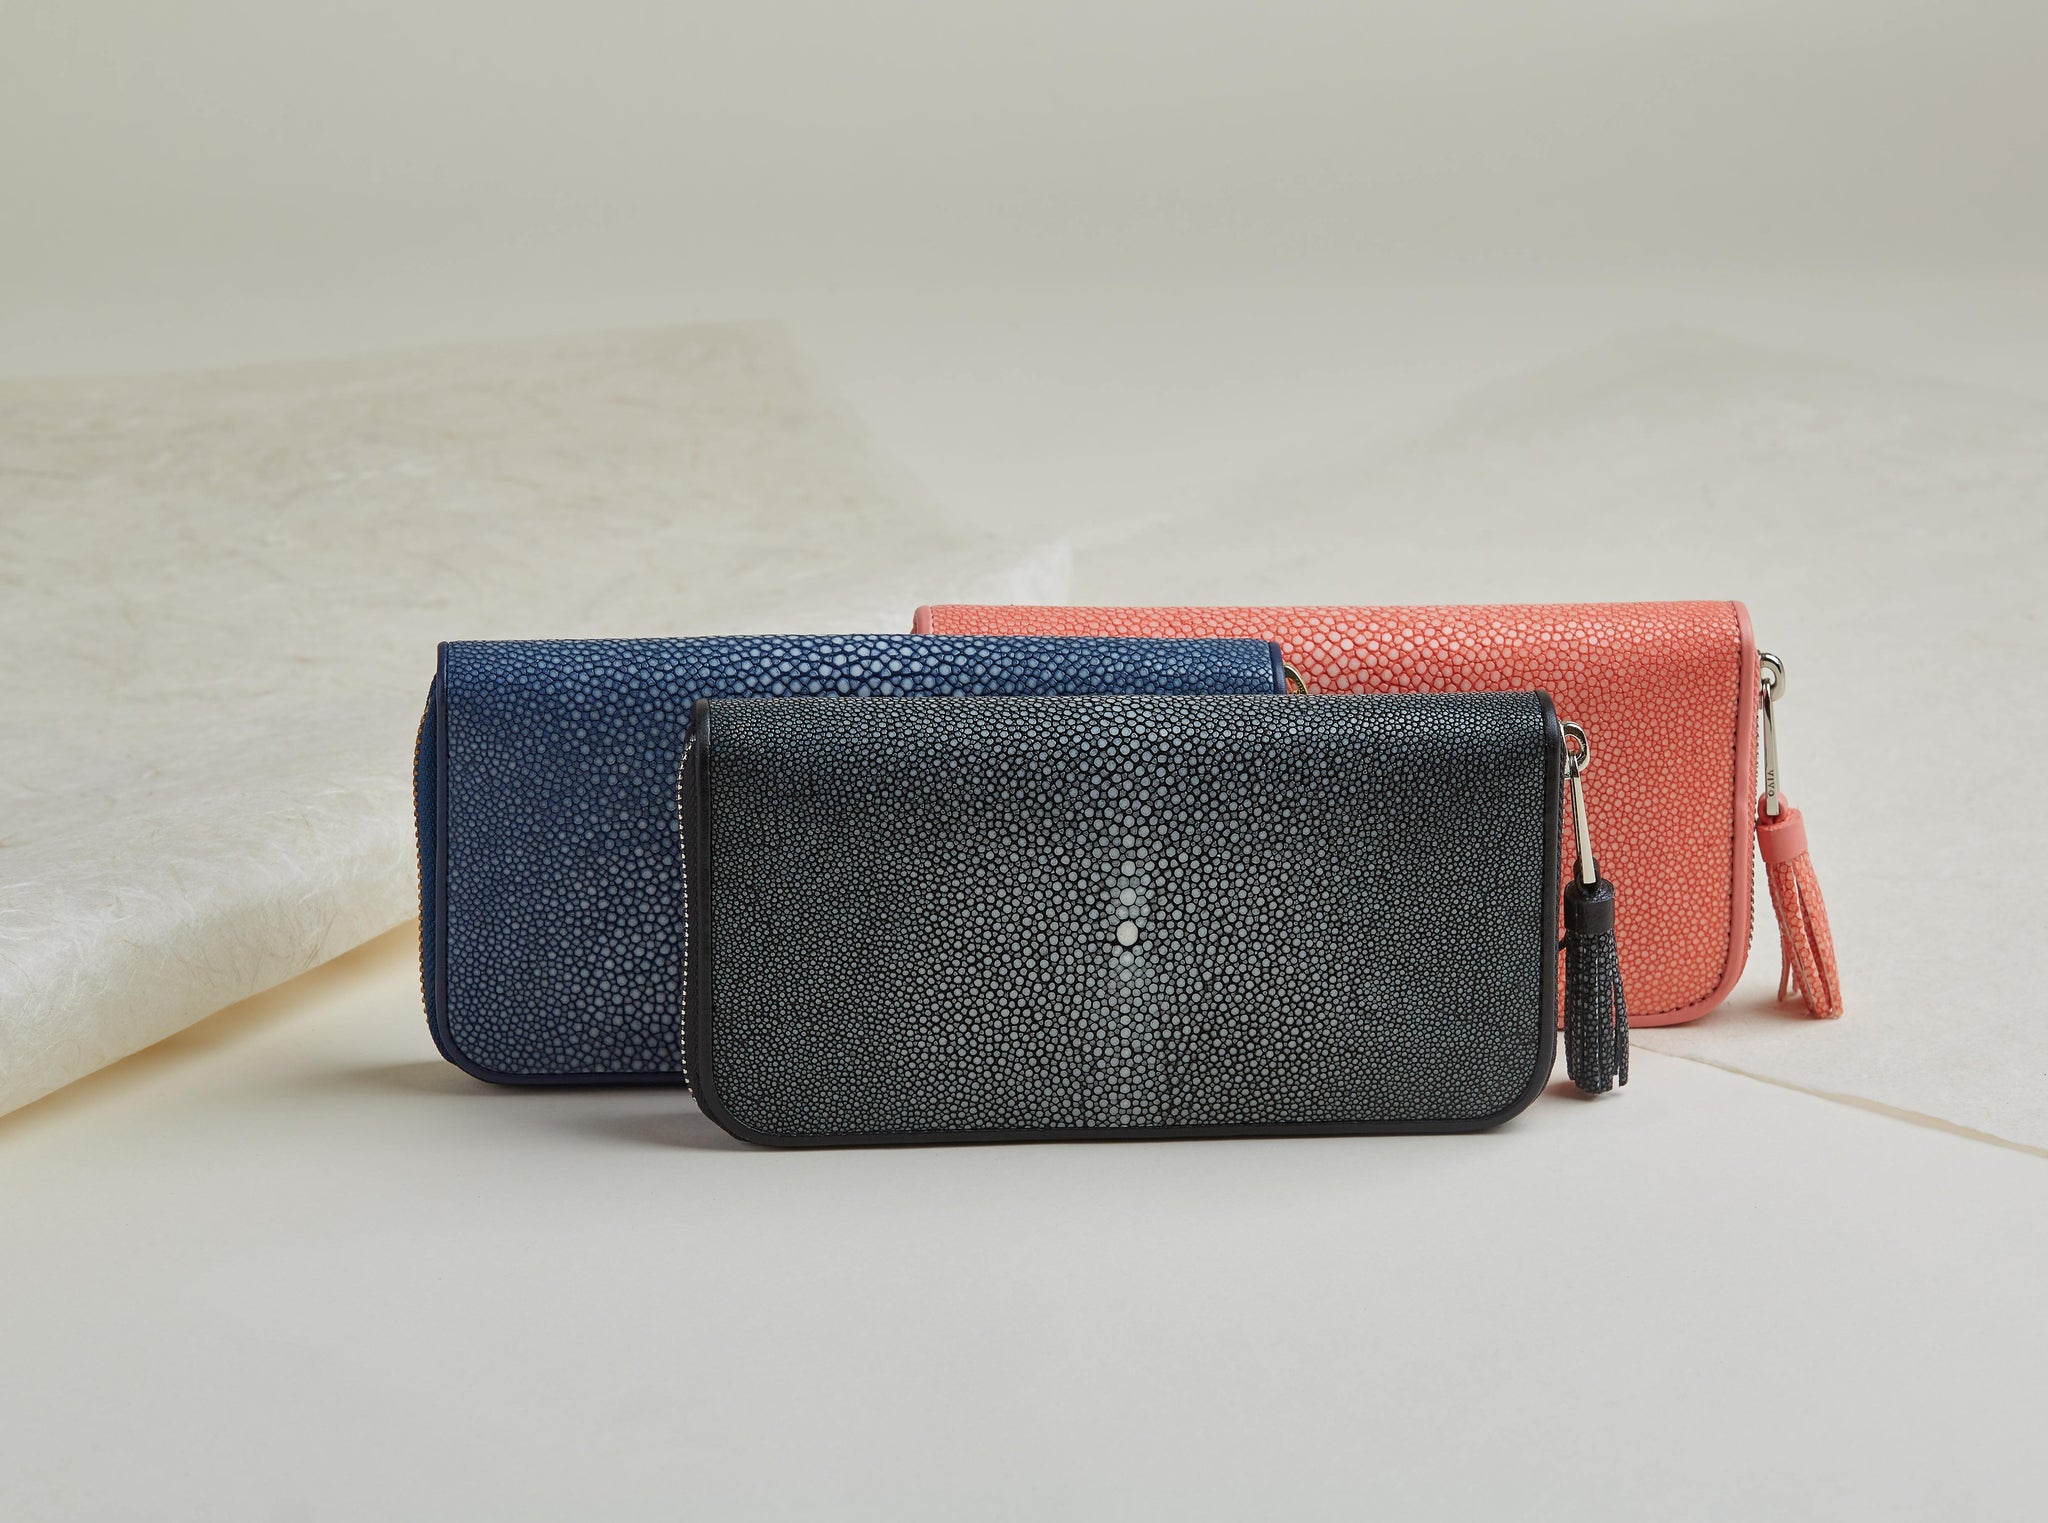 Shagreen leather zip clutch wallet with tassel